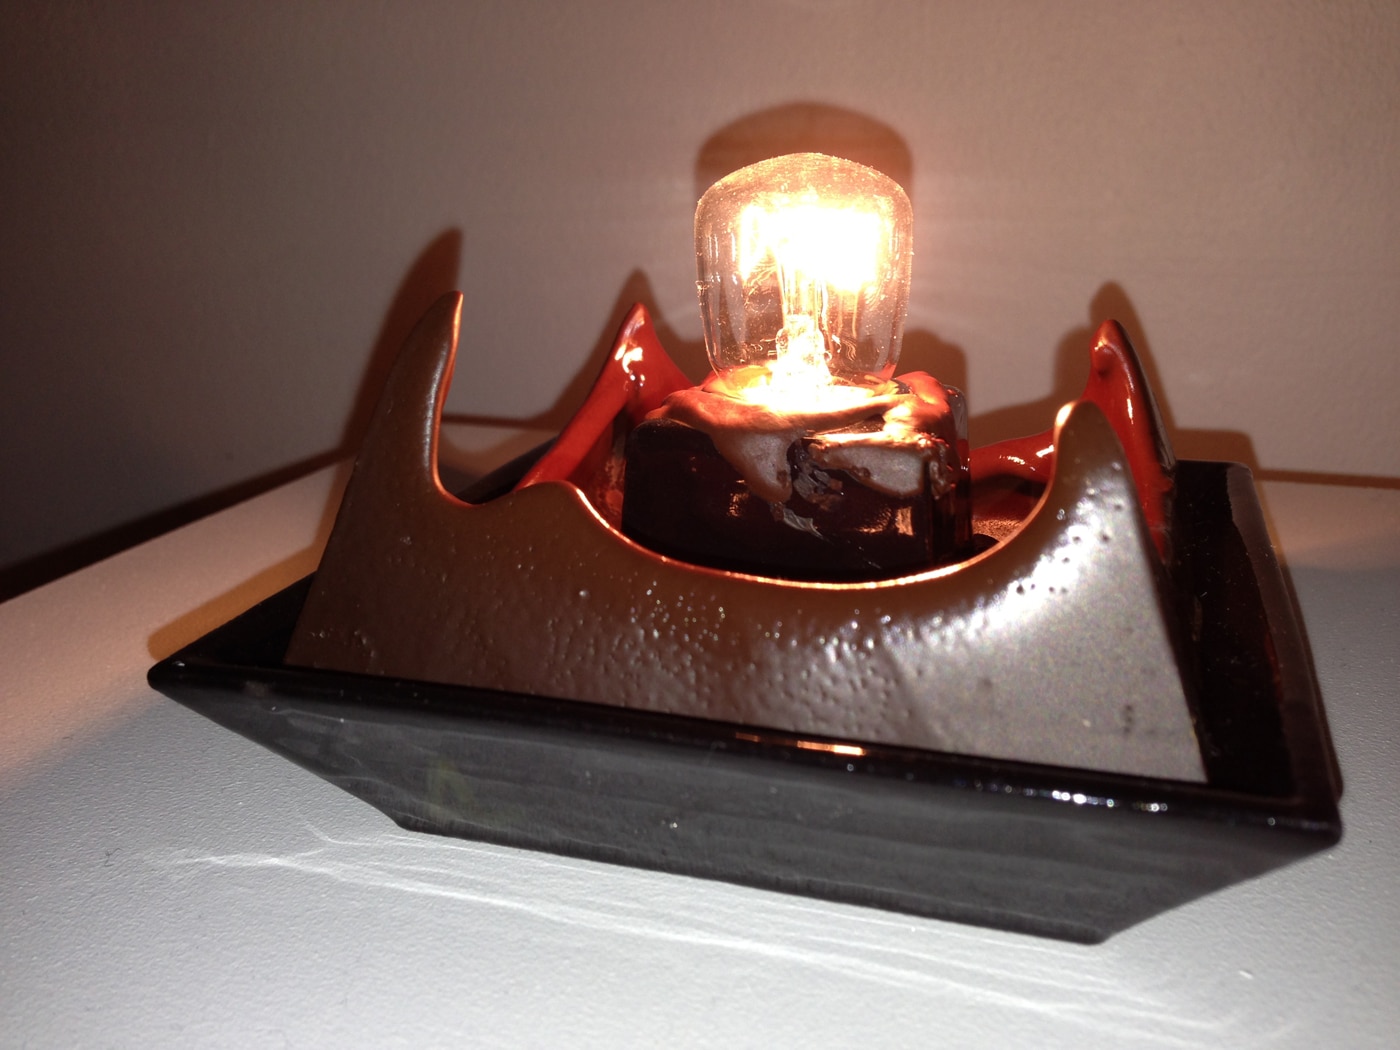 Melting Chocolate Lamp Design Is Uniquely Bright & Tasty